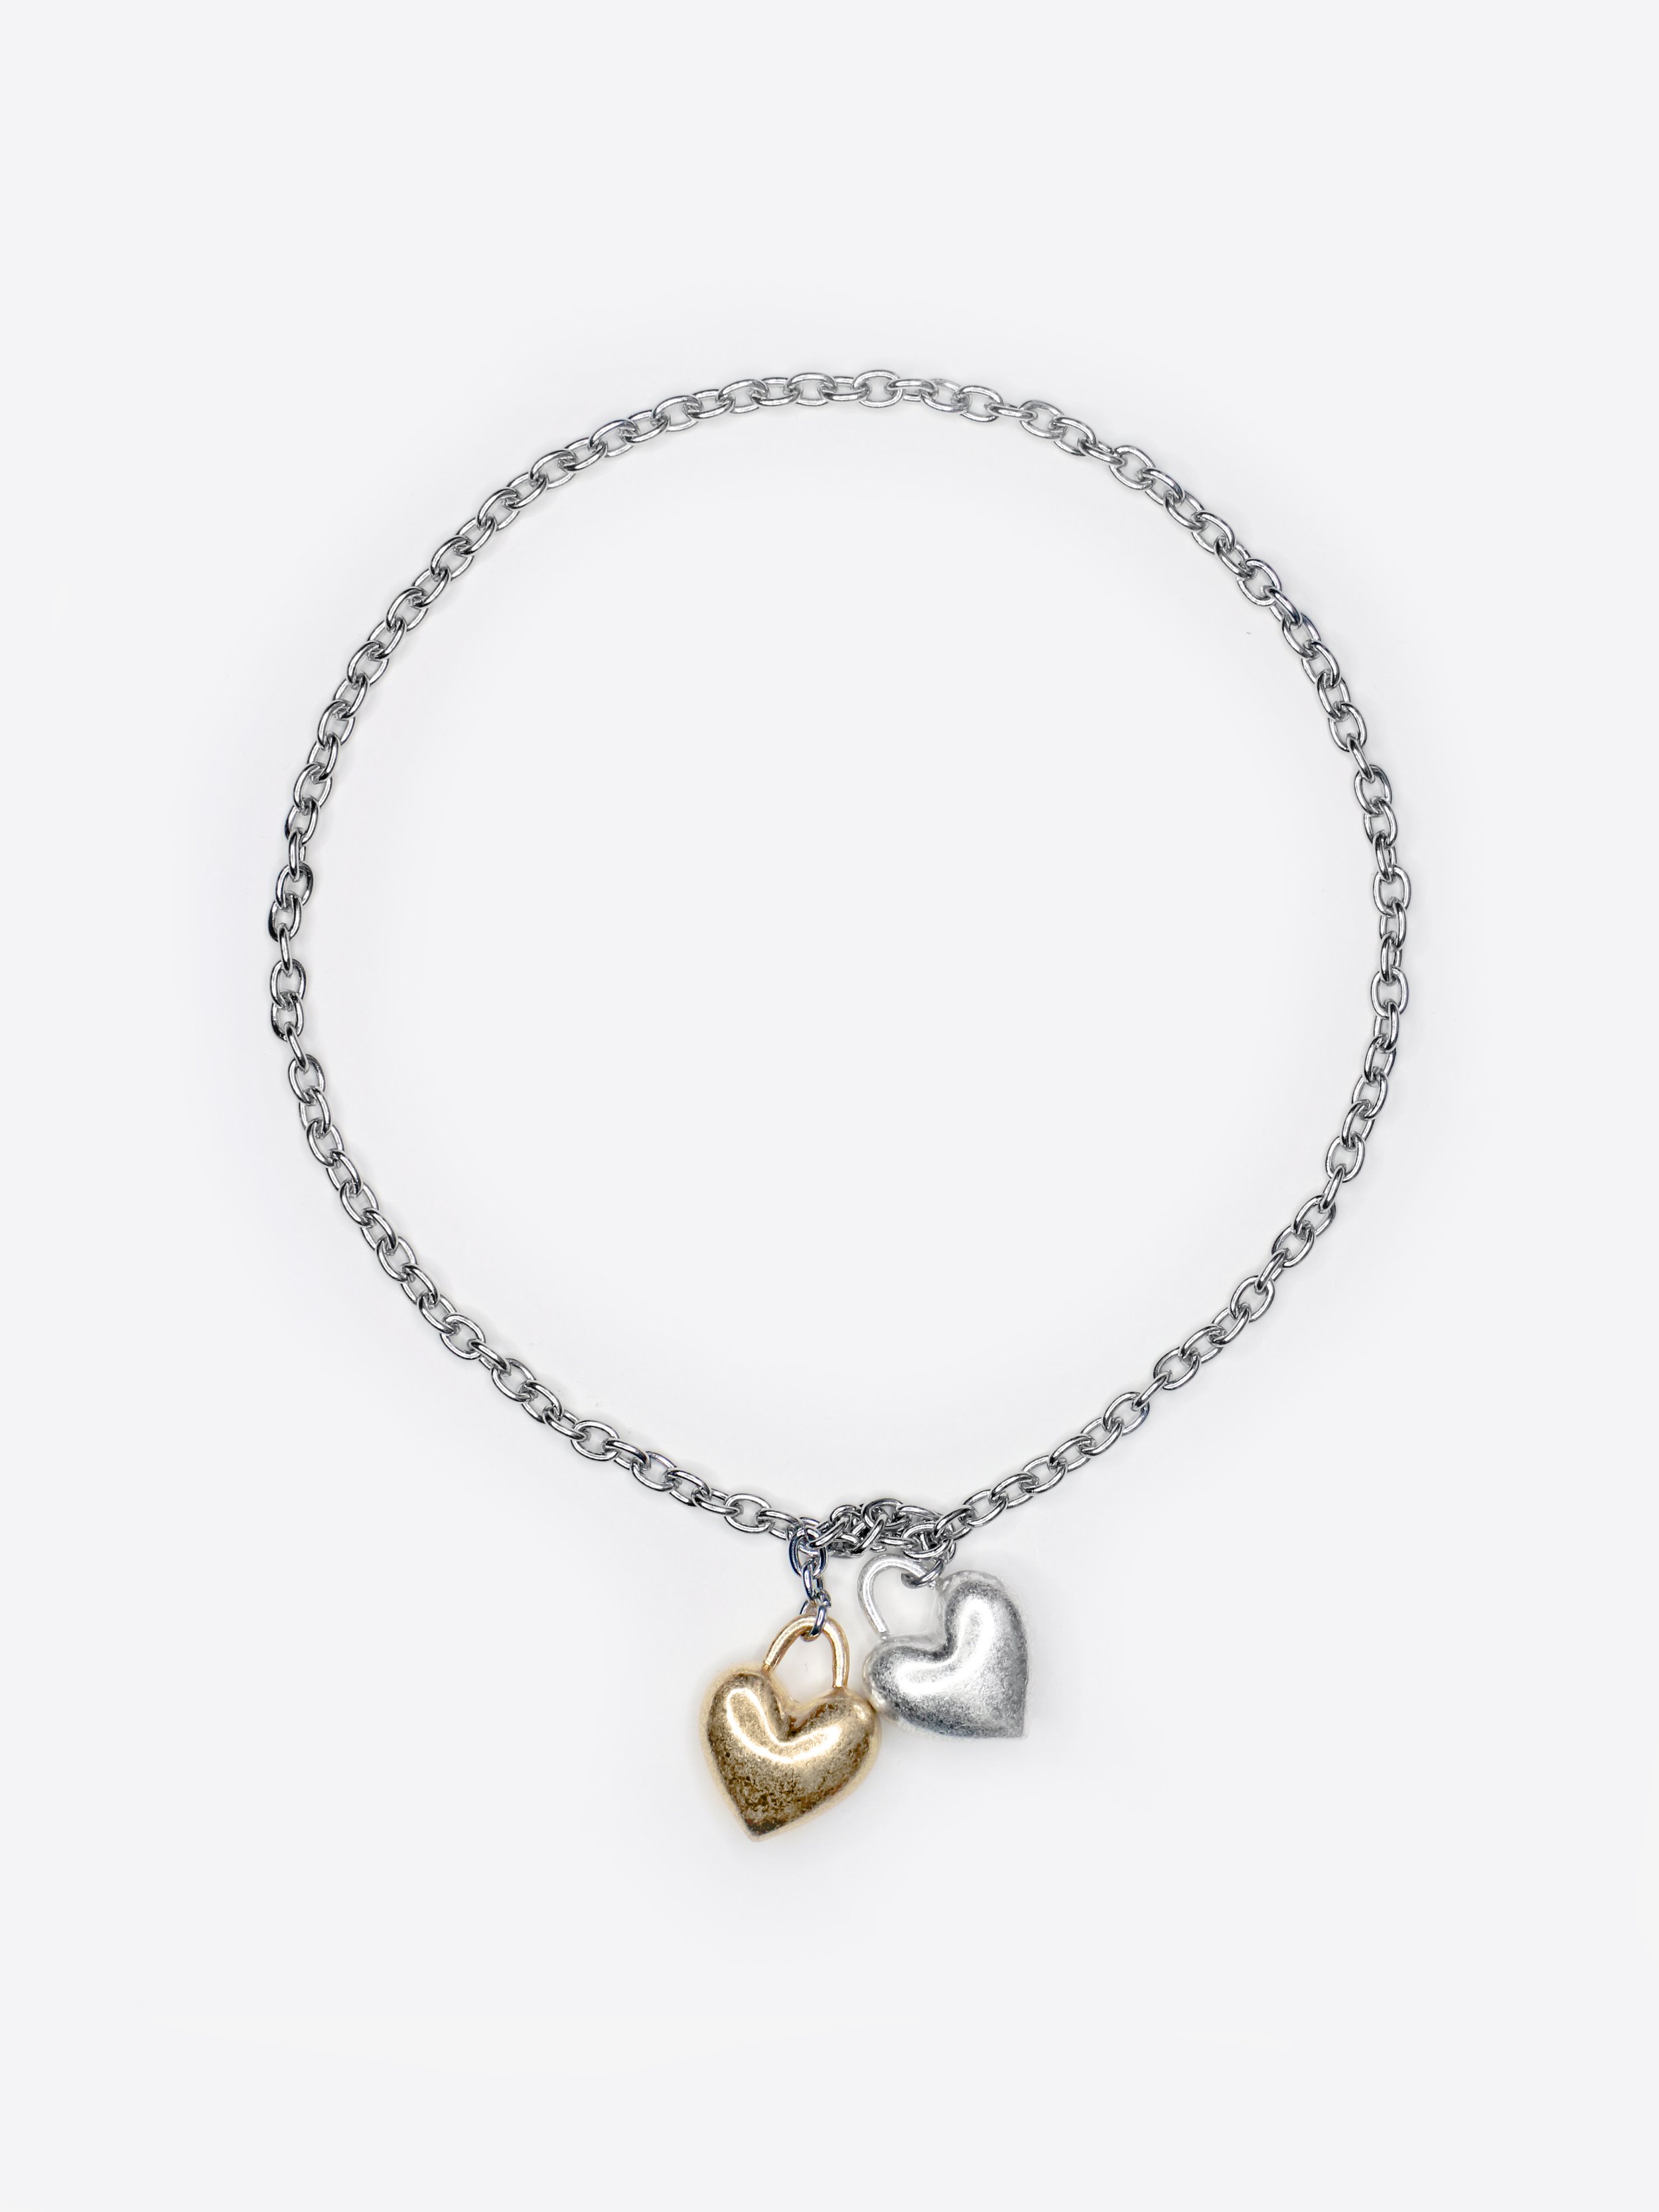 Entangled Hearts Necklace — Marland Backus